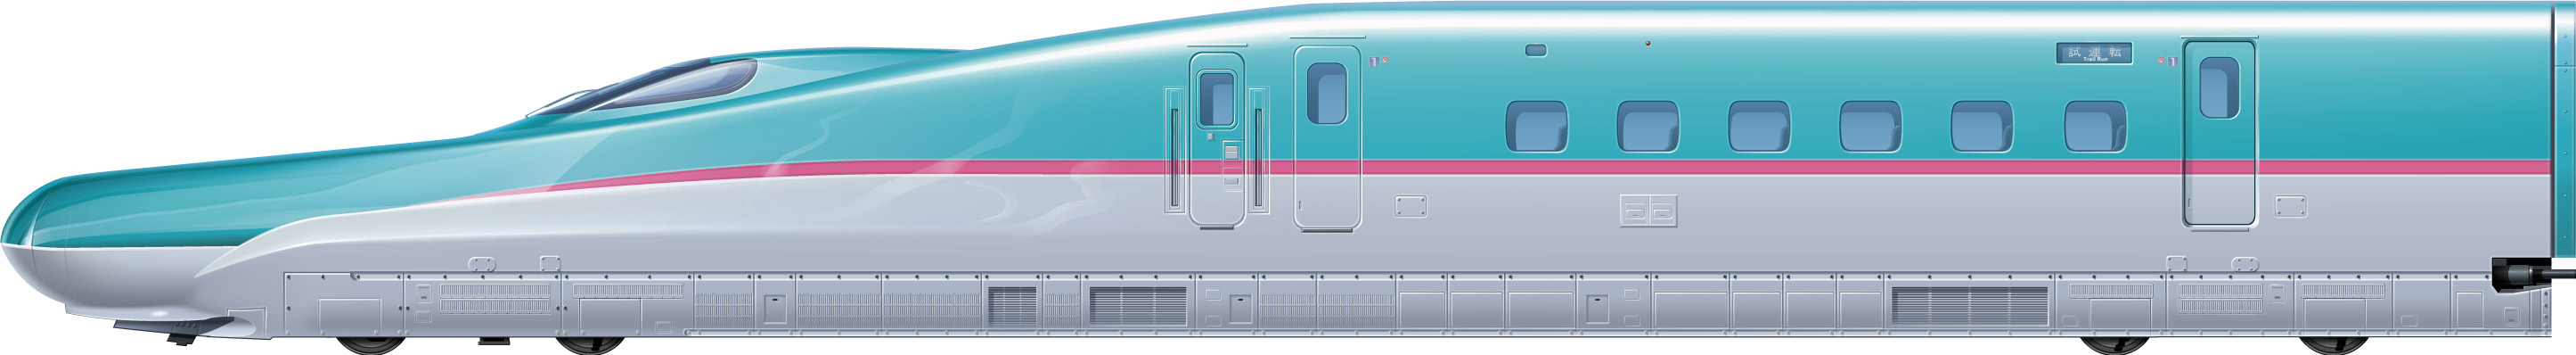 Jr 新幹線e5系 サイドビューイラスト